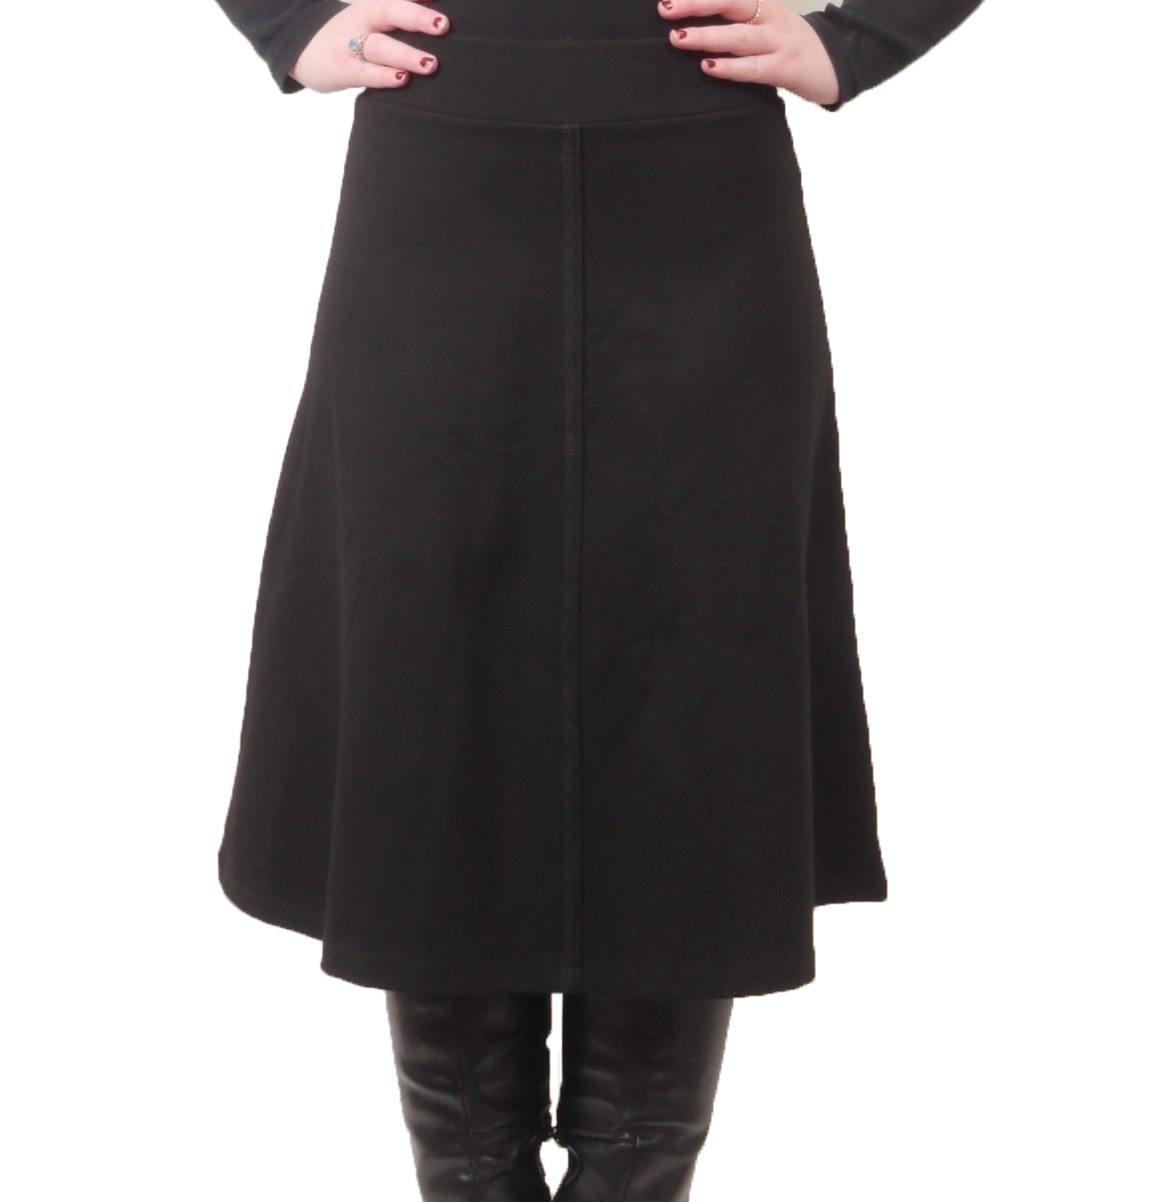 Wear & Flair Streamline Stitched A-Line Skirt (020) - Skirts